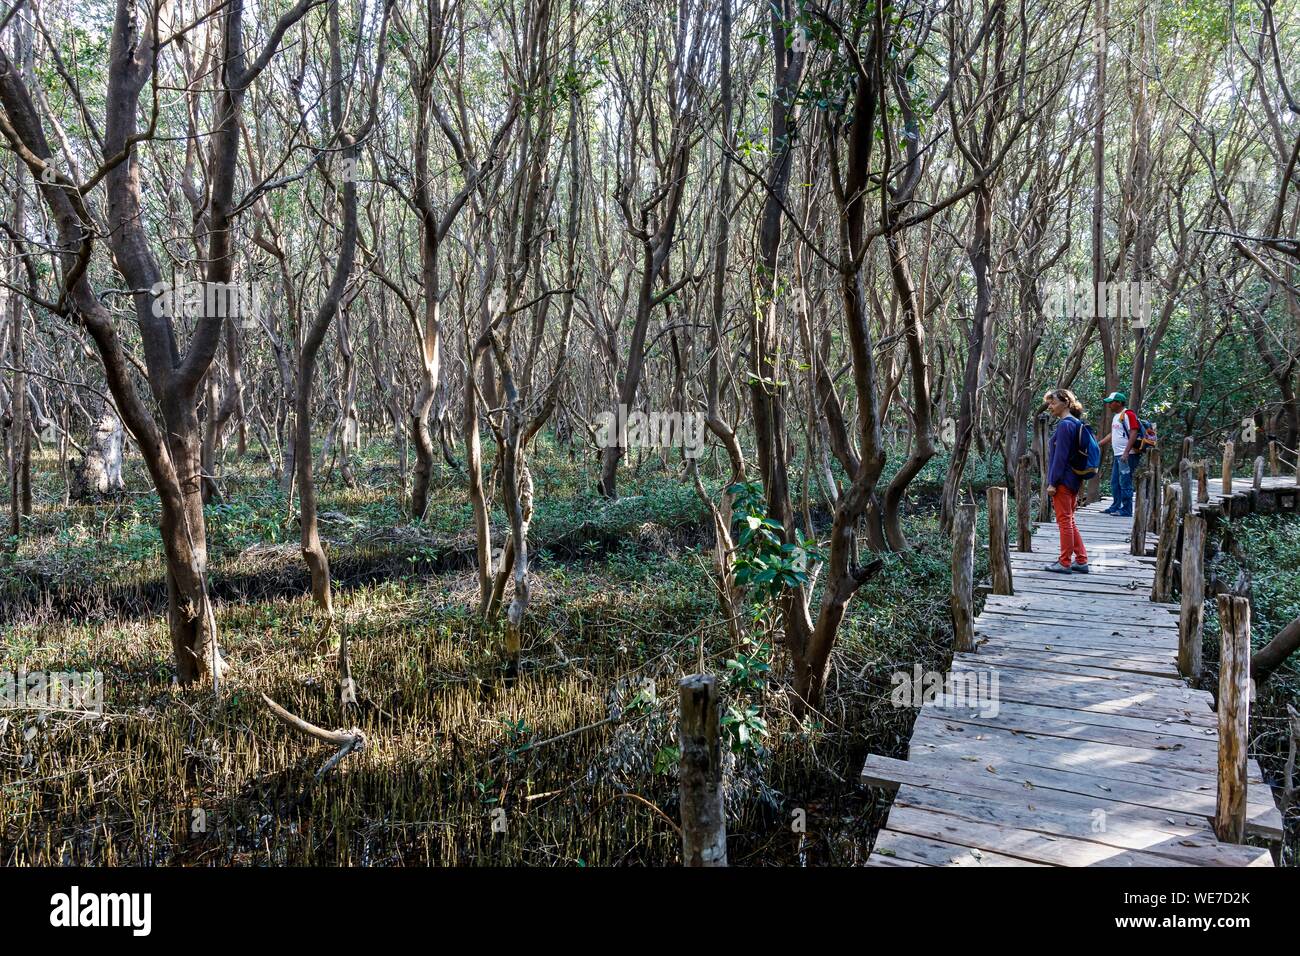 Mexico, Yucatan state, Celestun, walk in the mangrove swamp Stock Photo